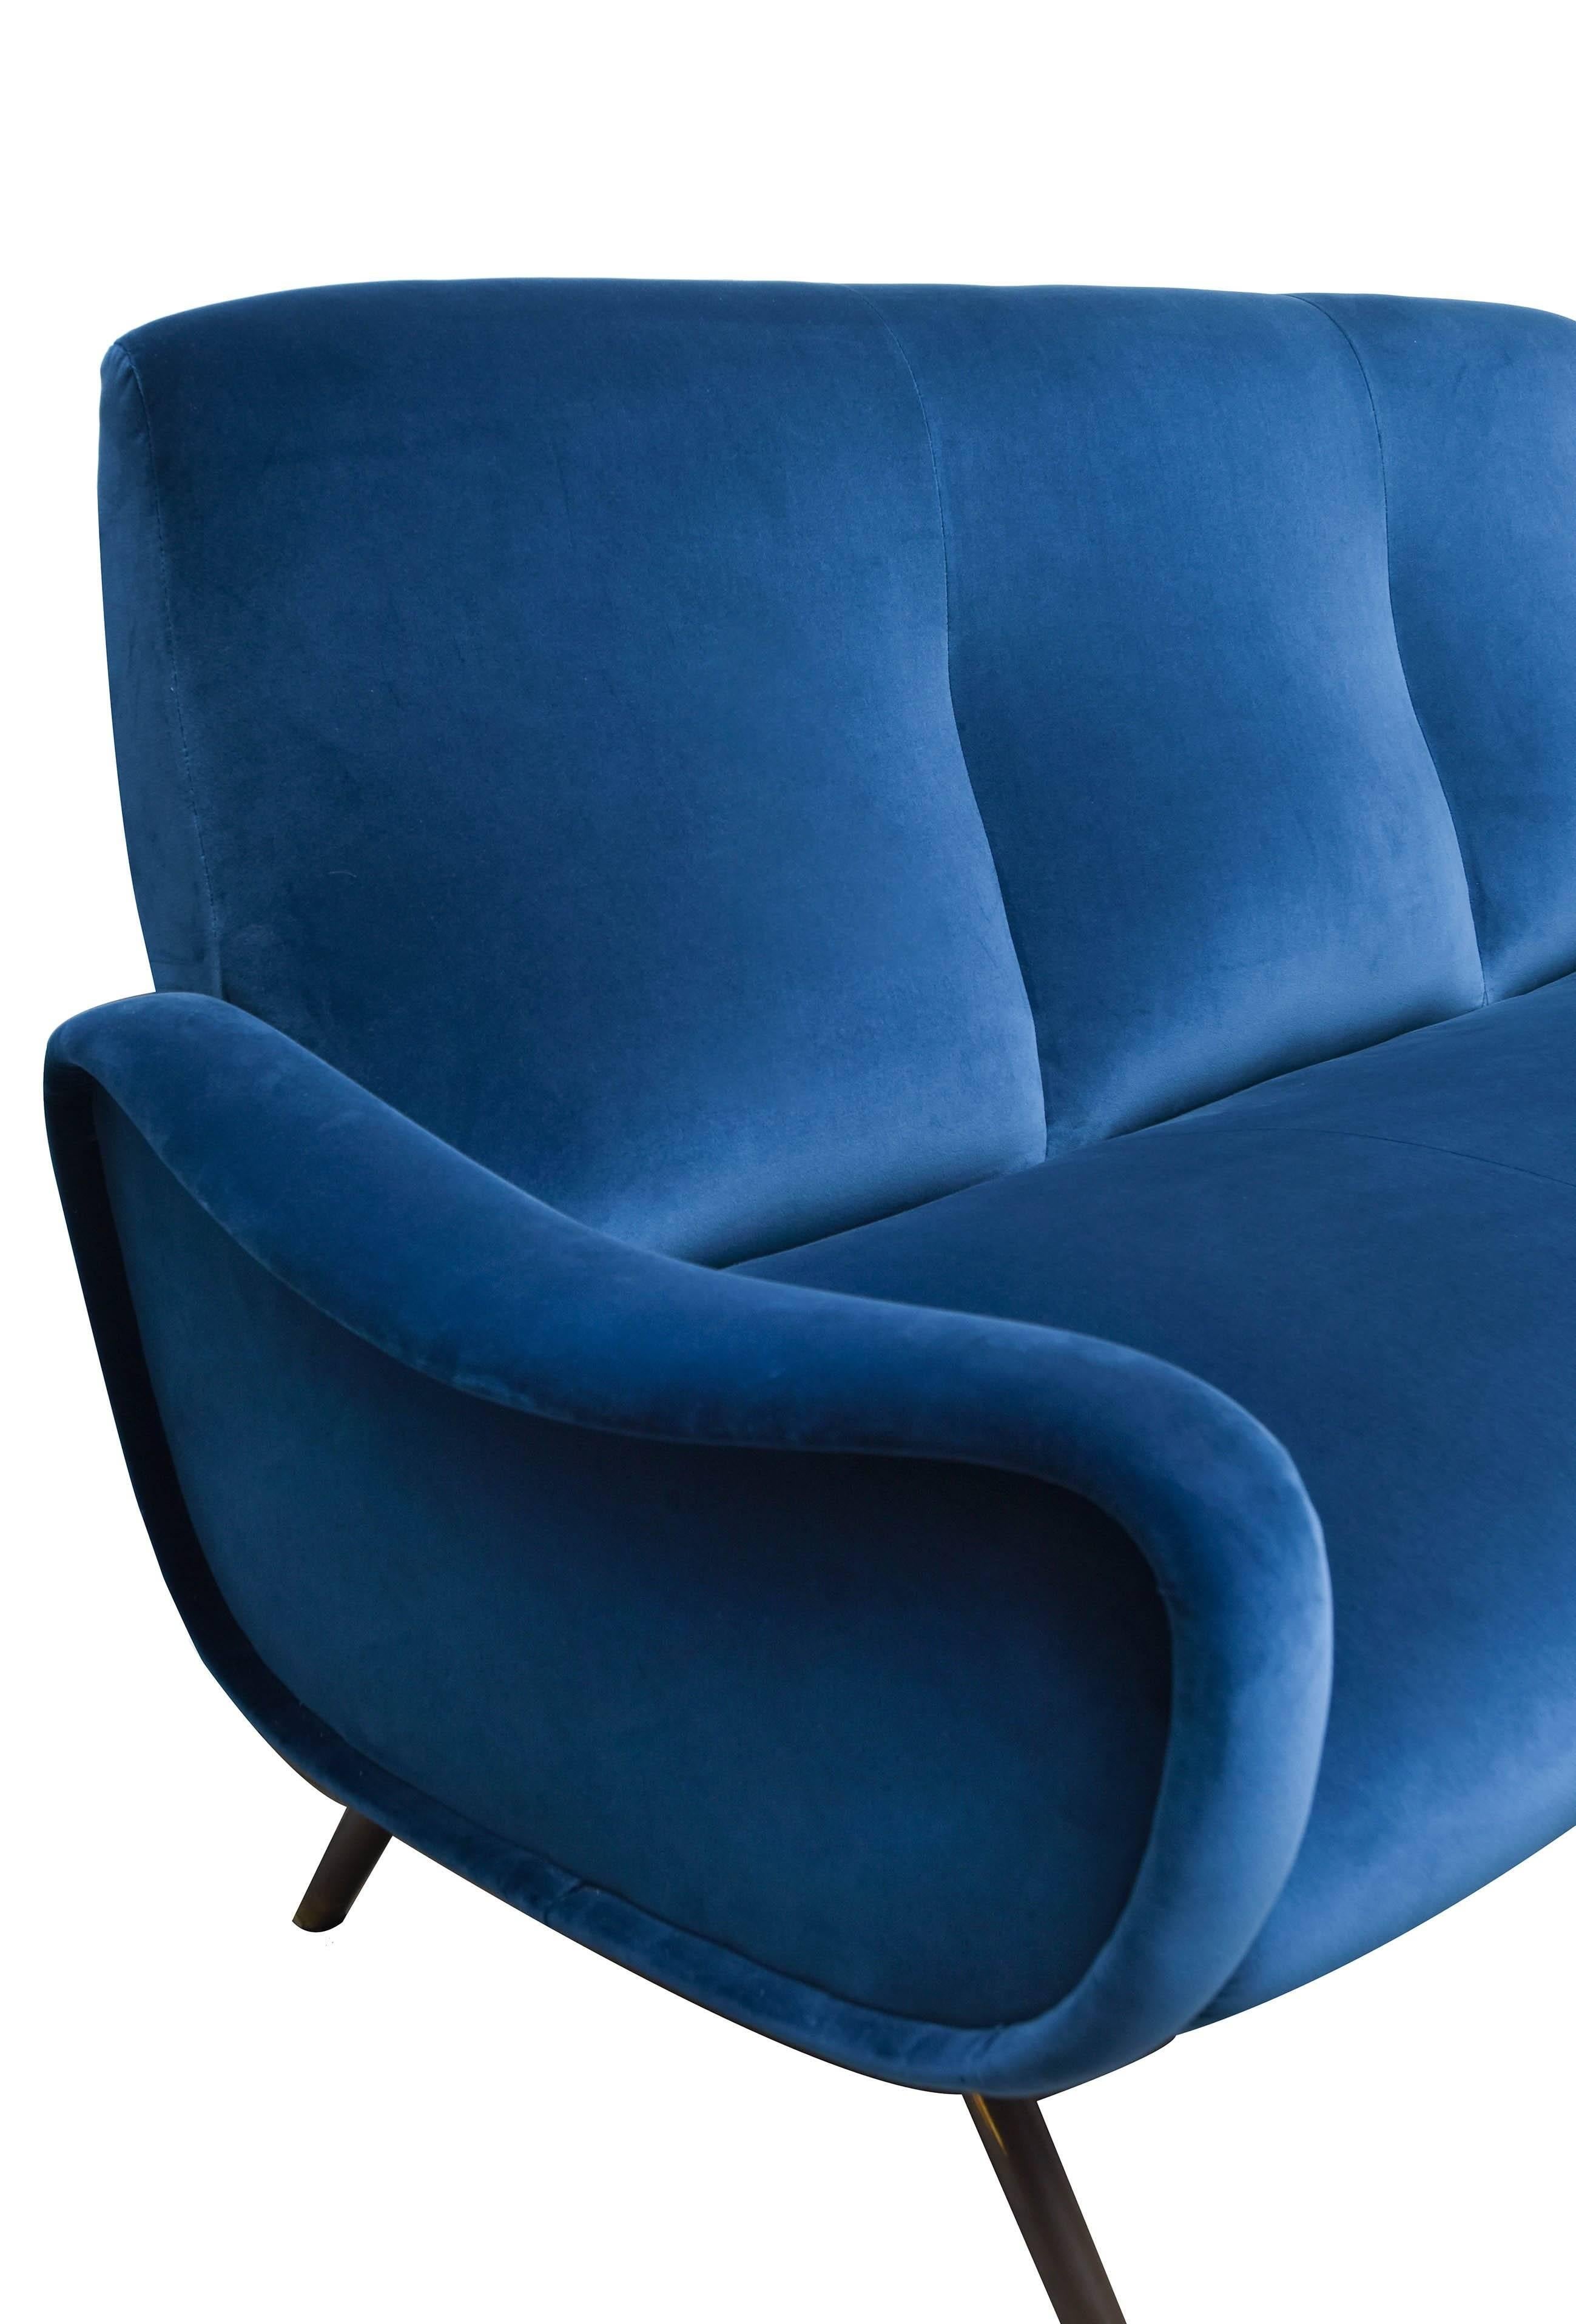 Mid-20th Century Marco Zanuso Blue Velvet Upholstery Italian “Lady” Sofa for Arflex, 1950s 